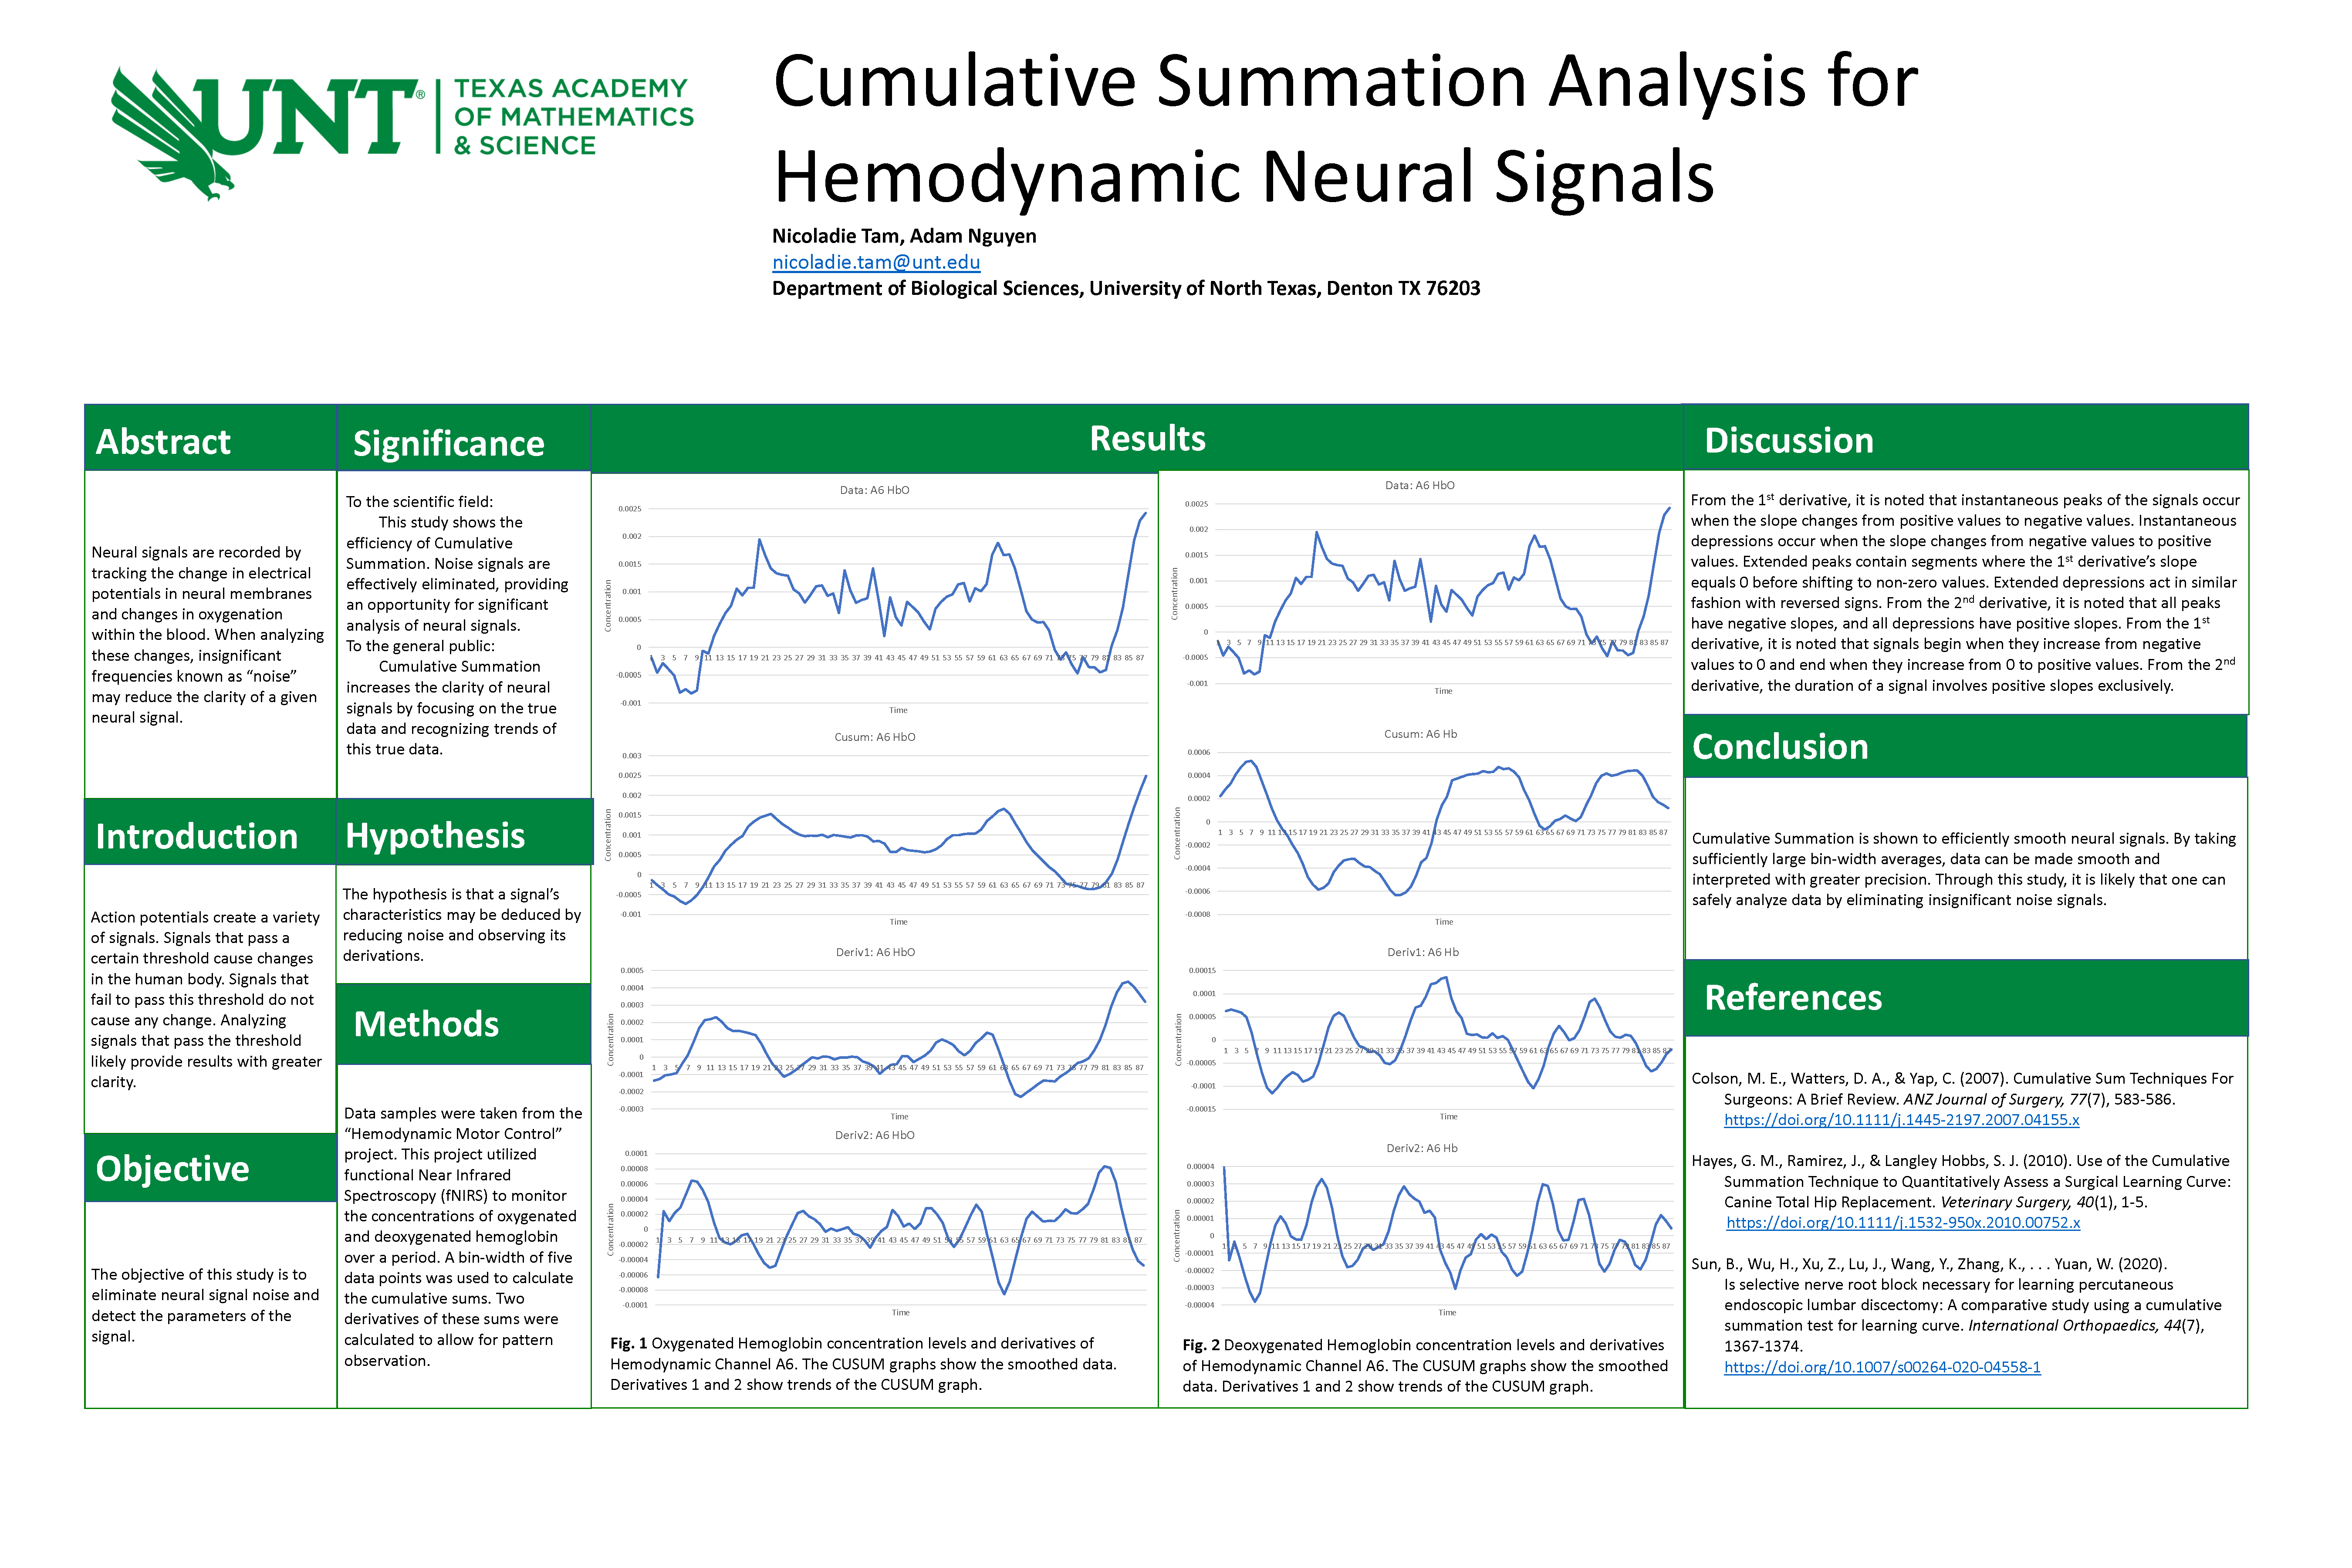 Cumulative Summation Analysis for Hemodynamic Neural Signals